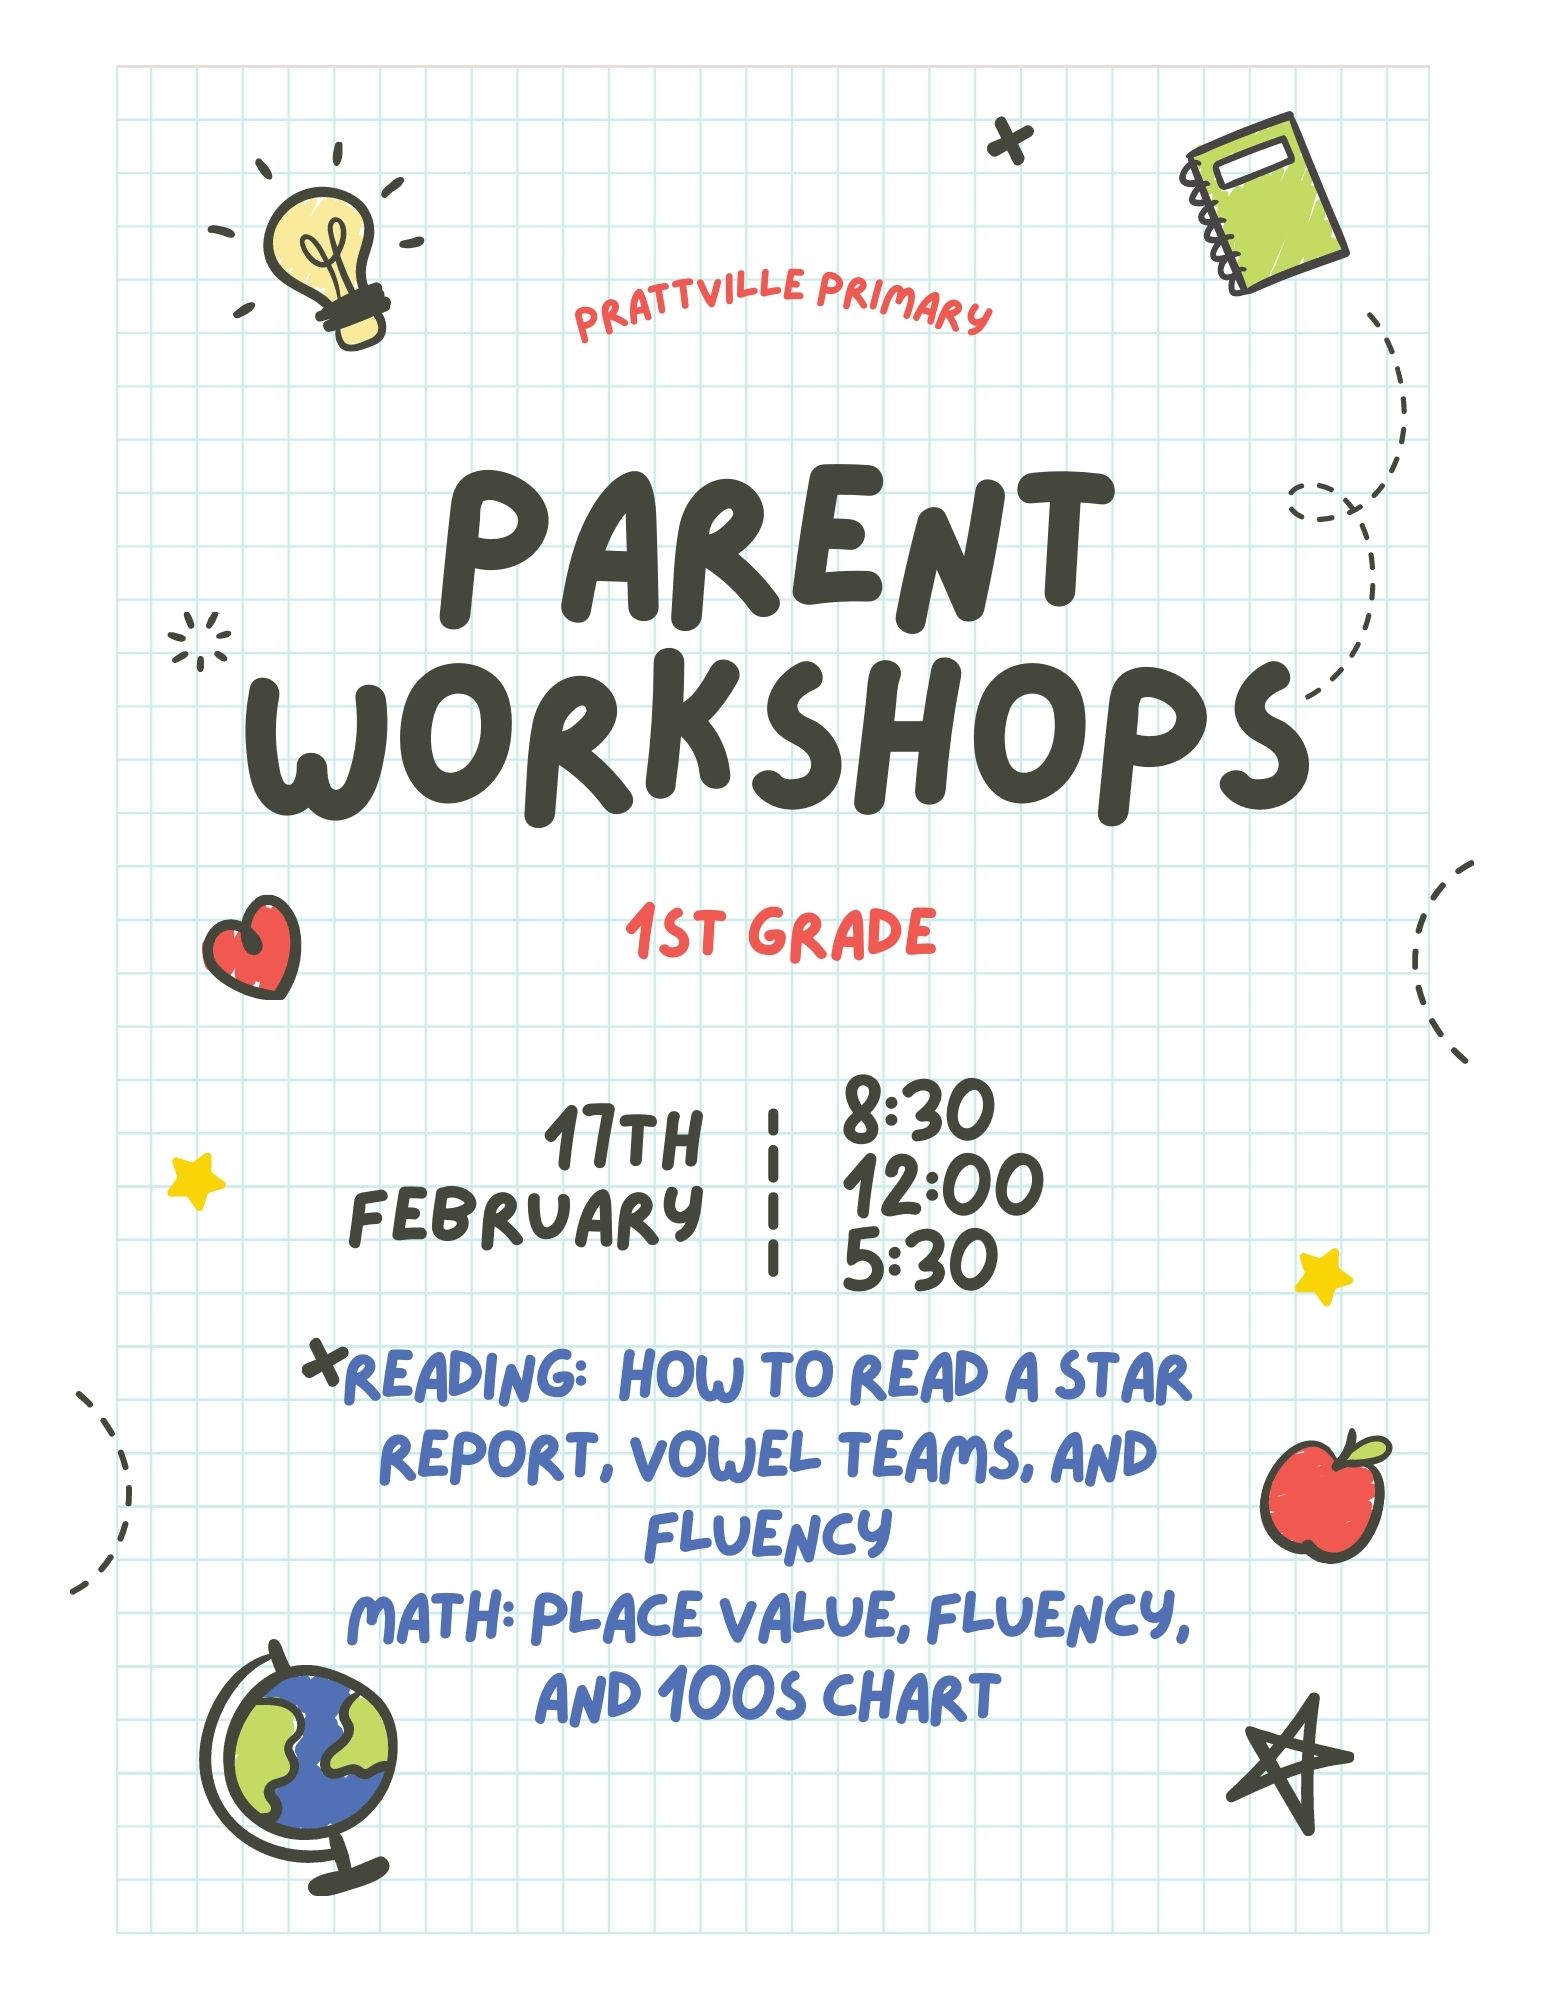 1st Grade Parent Workshop